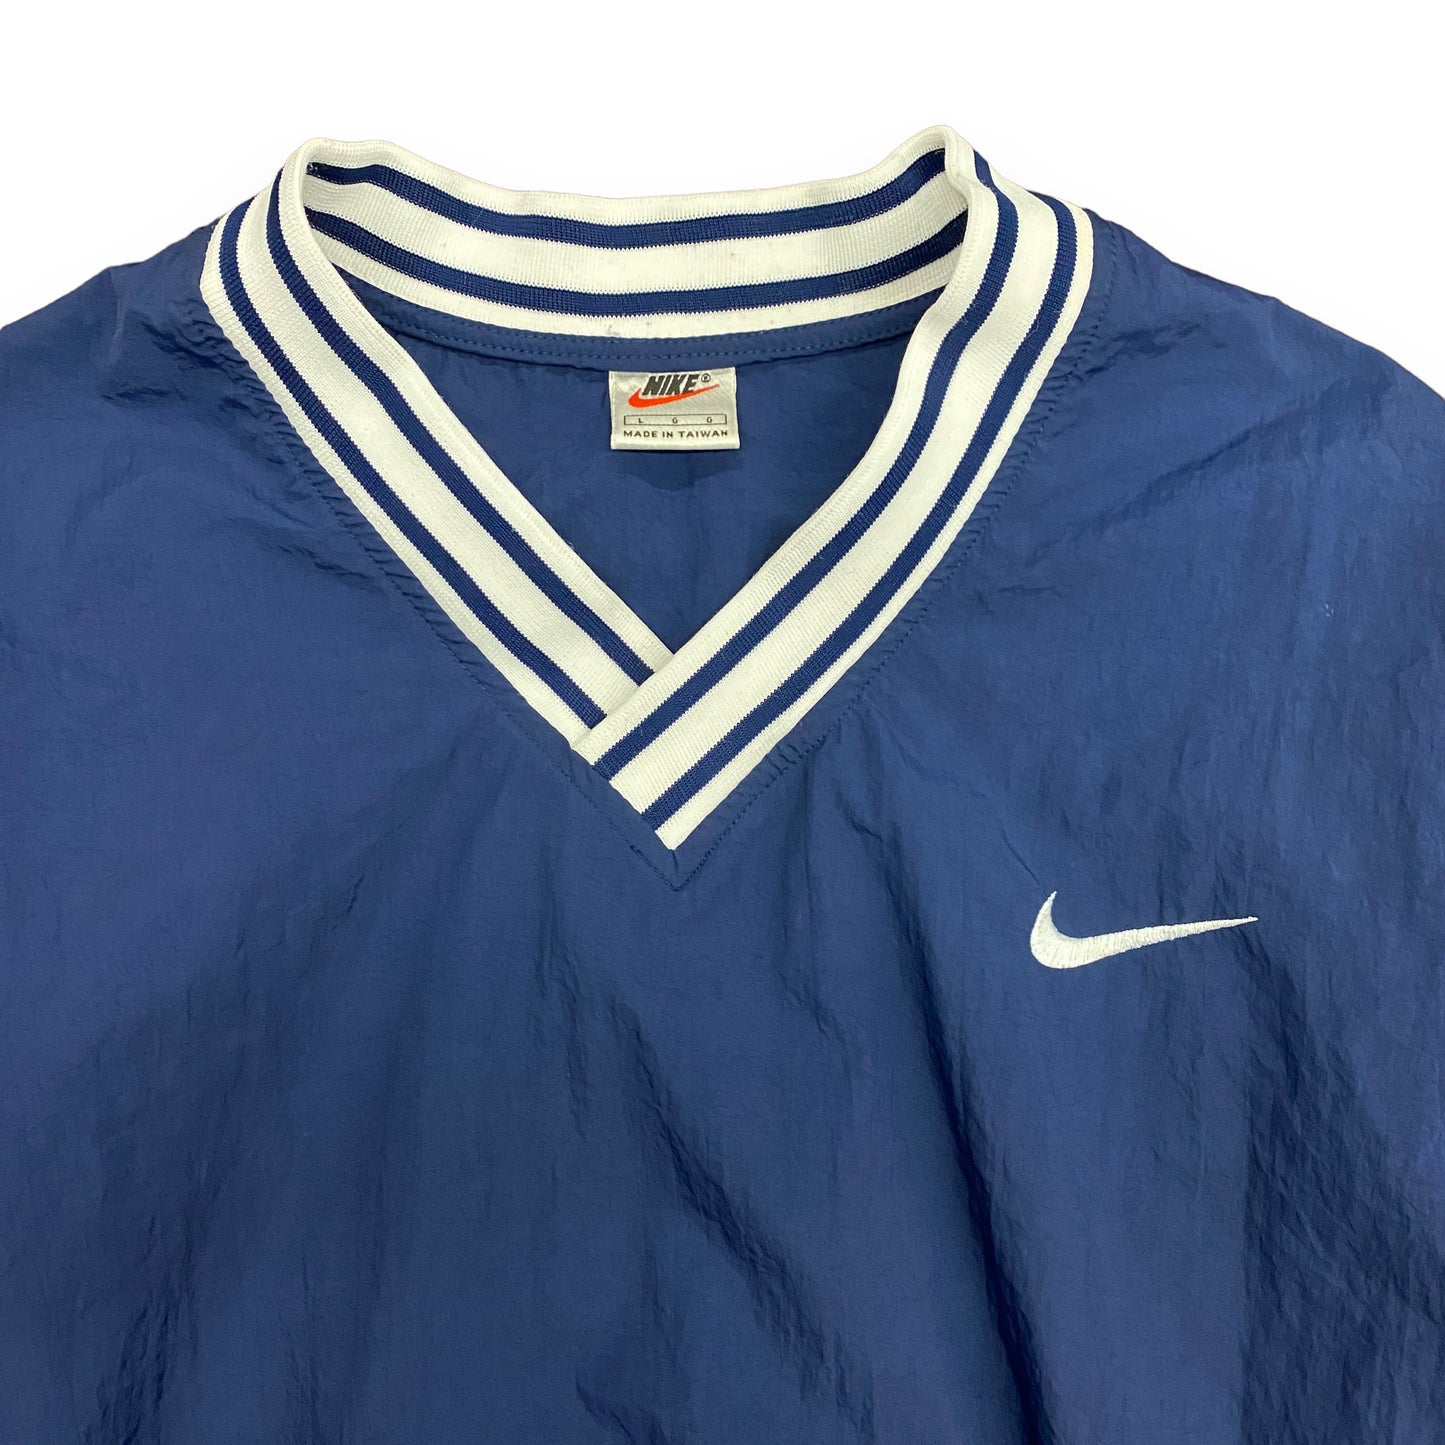 Vintage 1990s Nike Navy Blue Pullover Windbreaker - Size Large